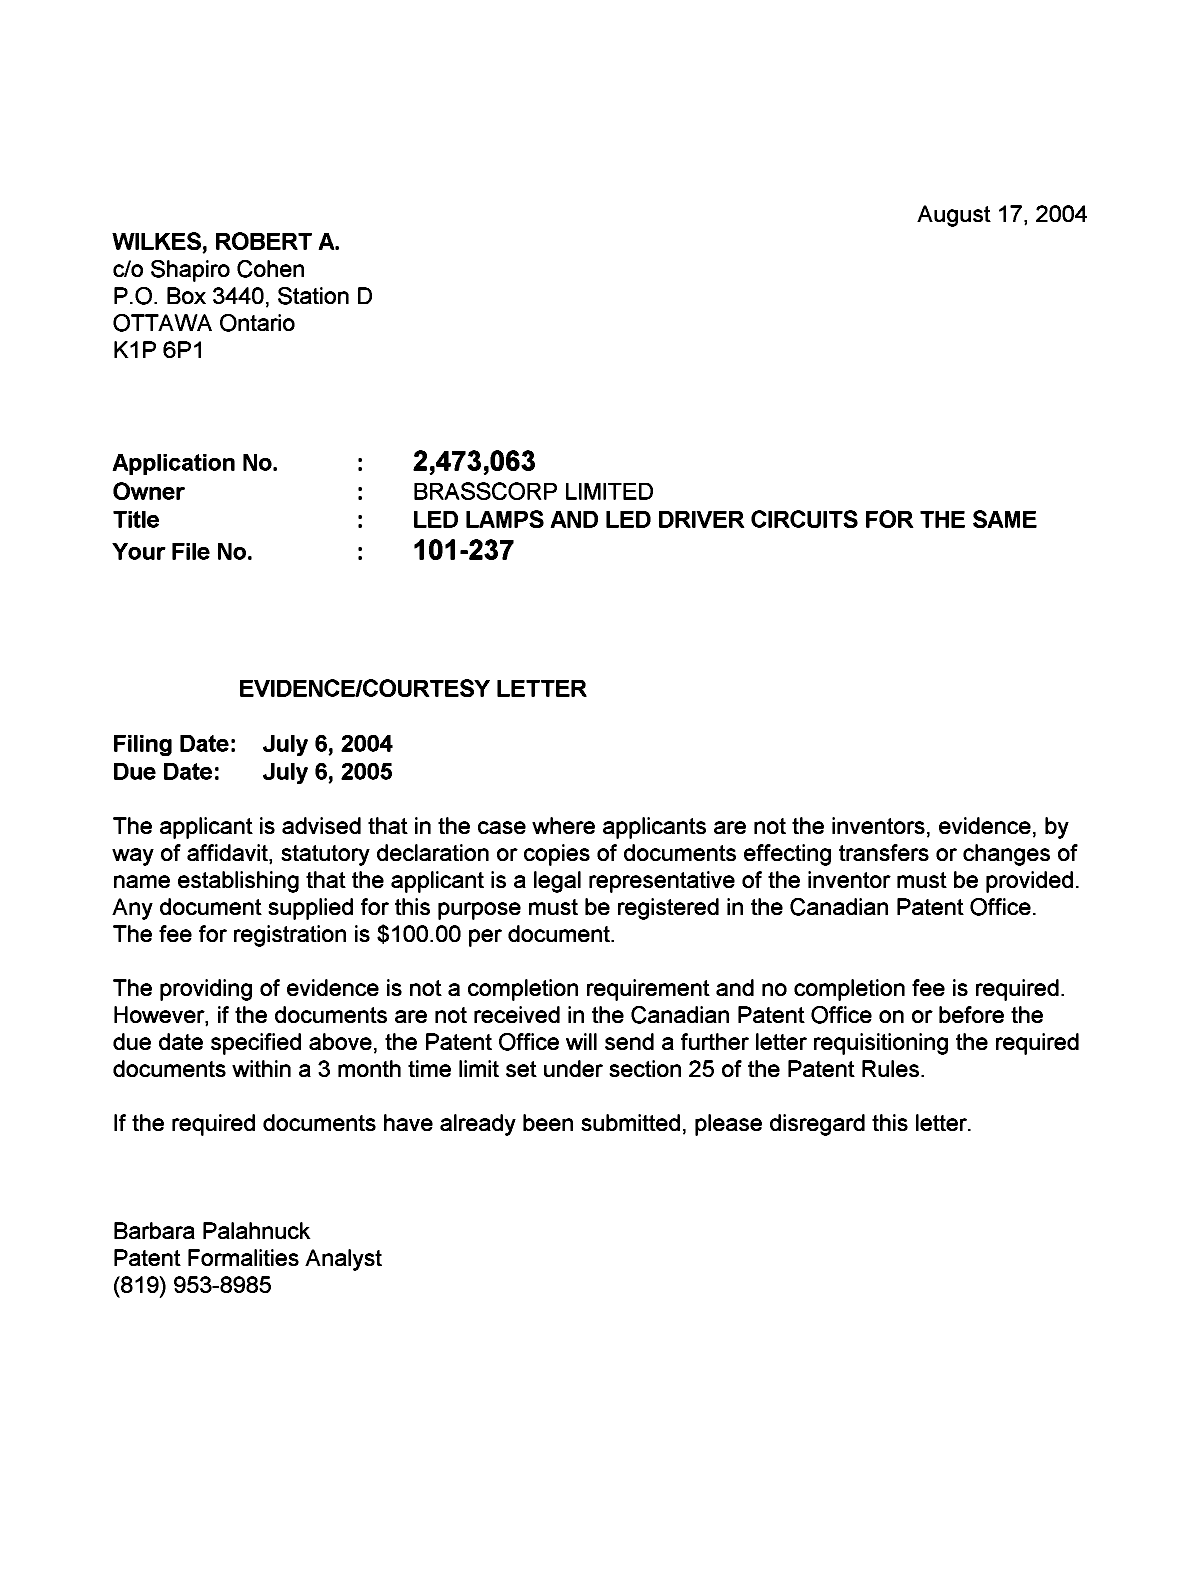 Canadian Patent Document 2473063. Correspondence 20031210. Image 1 of 1